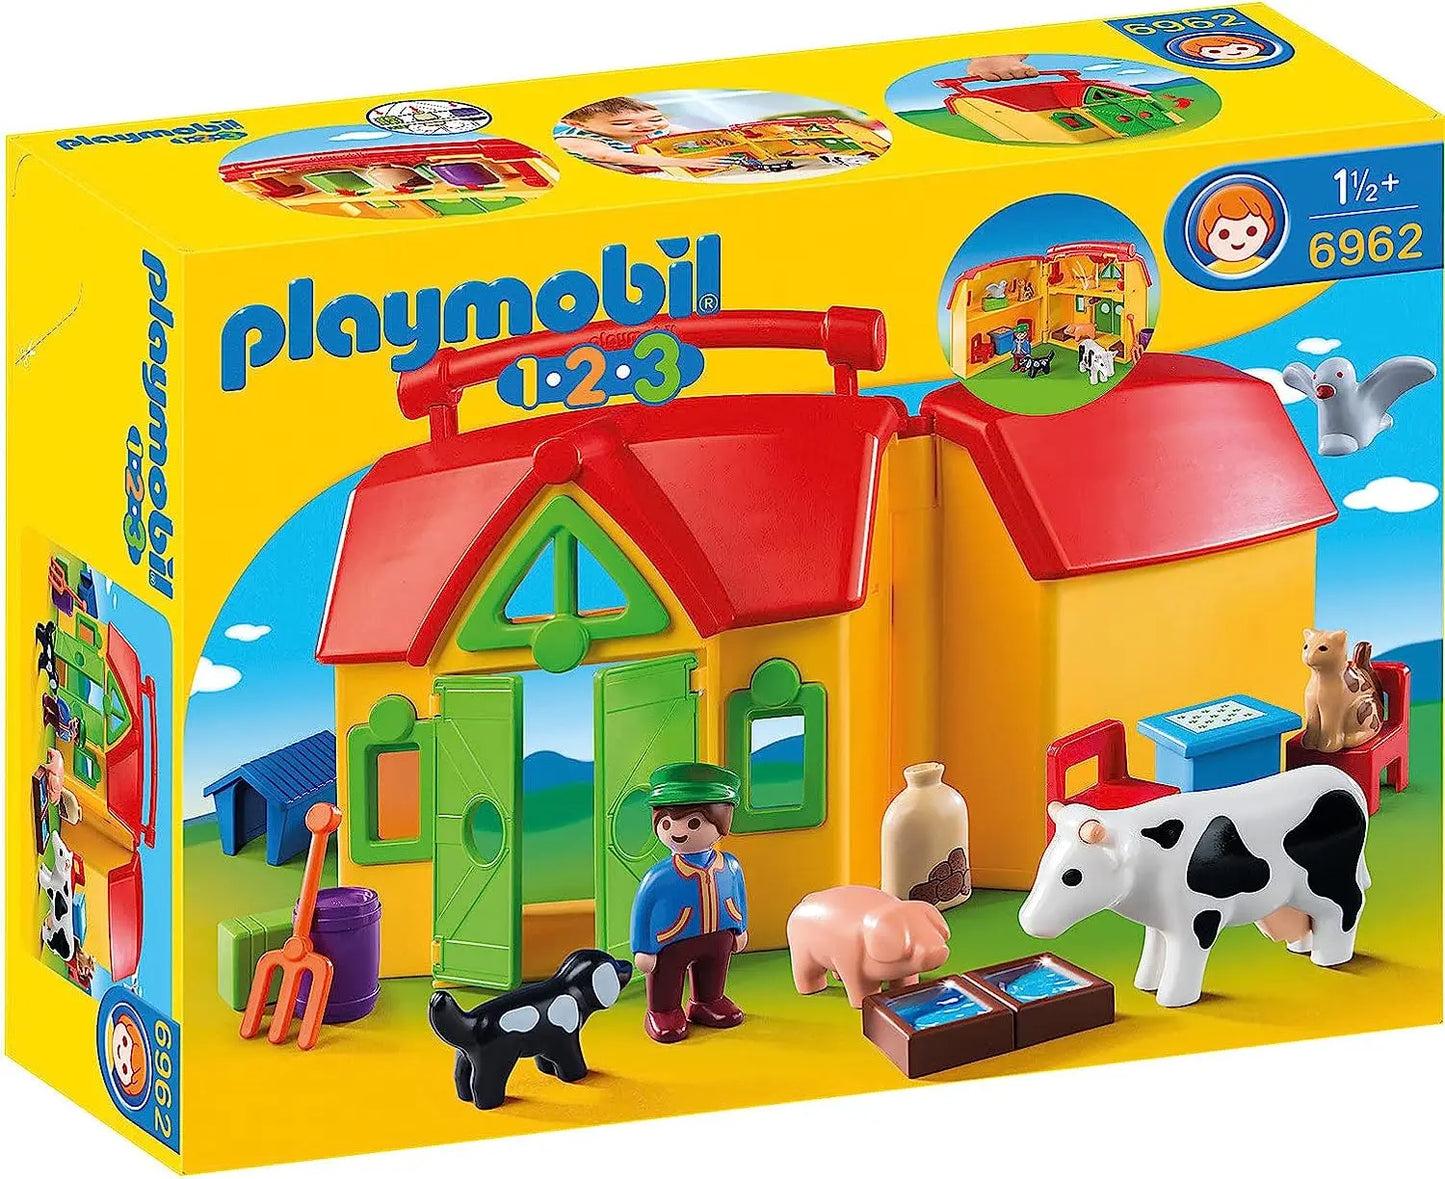 playmobil 6962 Ferme transportable avec animaux Playmobil 1.2.3 playmobil animaux sauvages playmobil